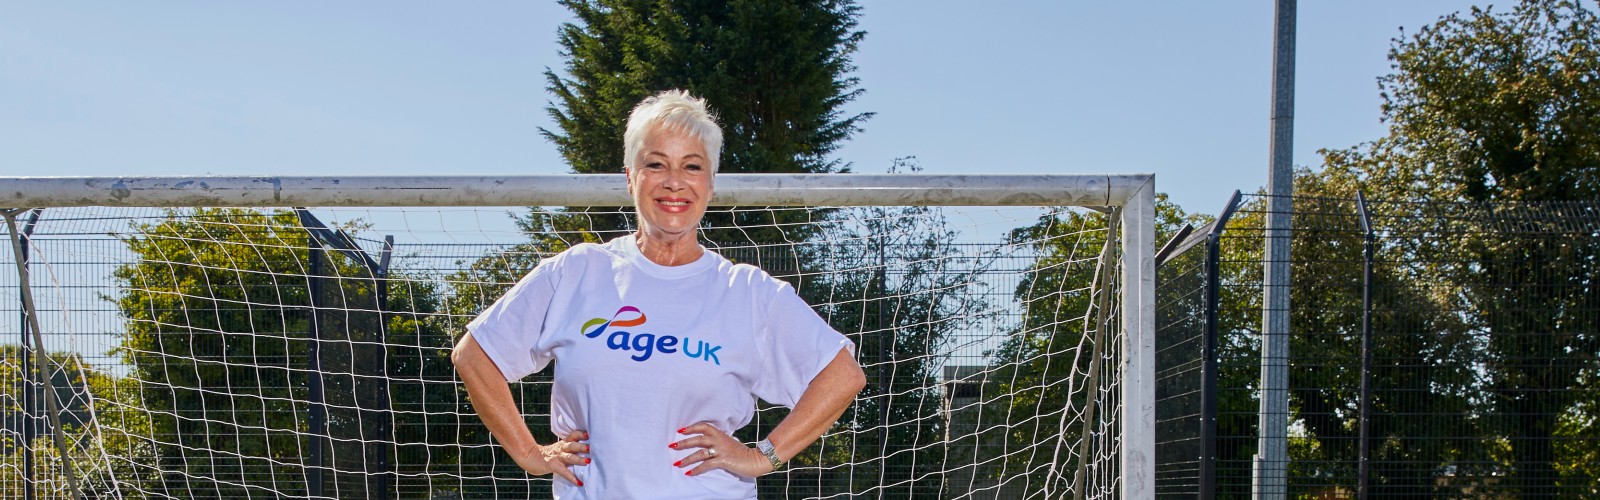 Denise Welch, wearing an Age UK t-shirt